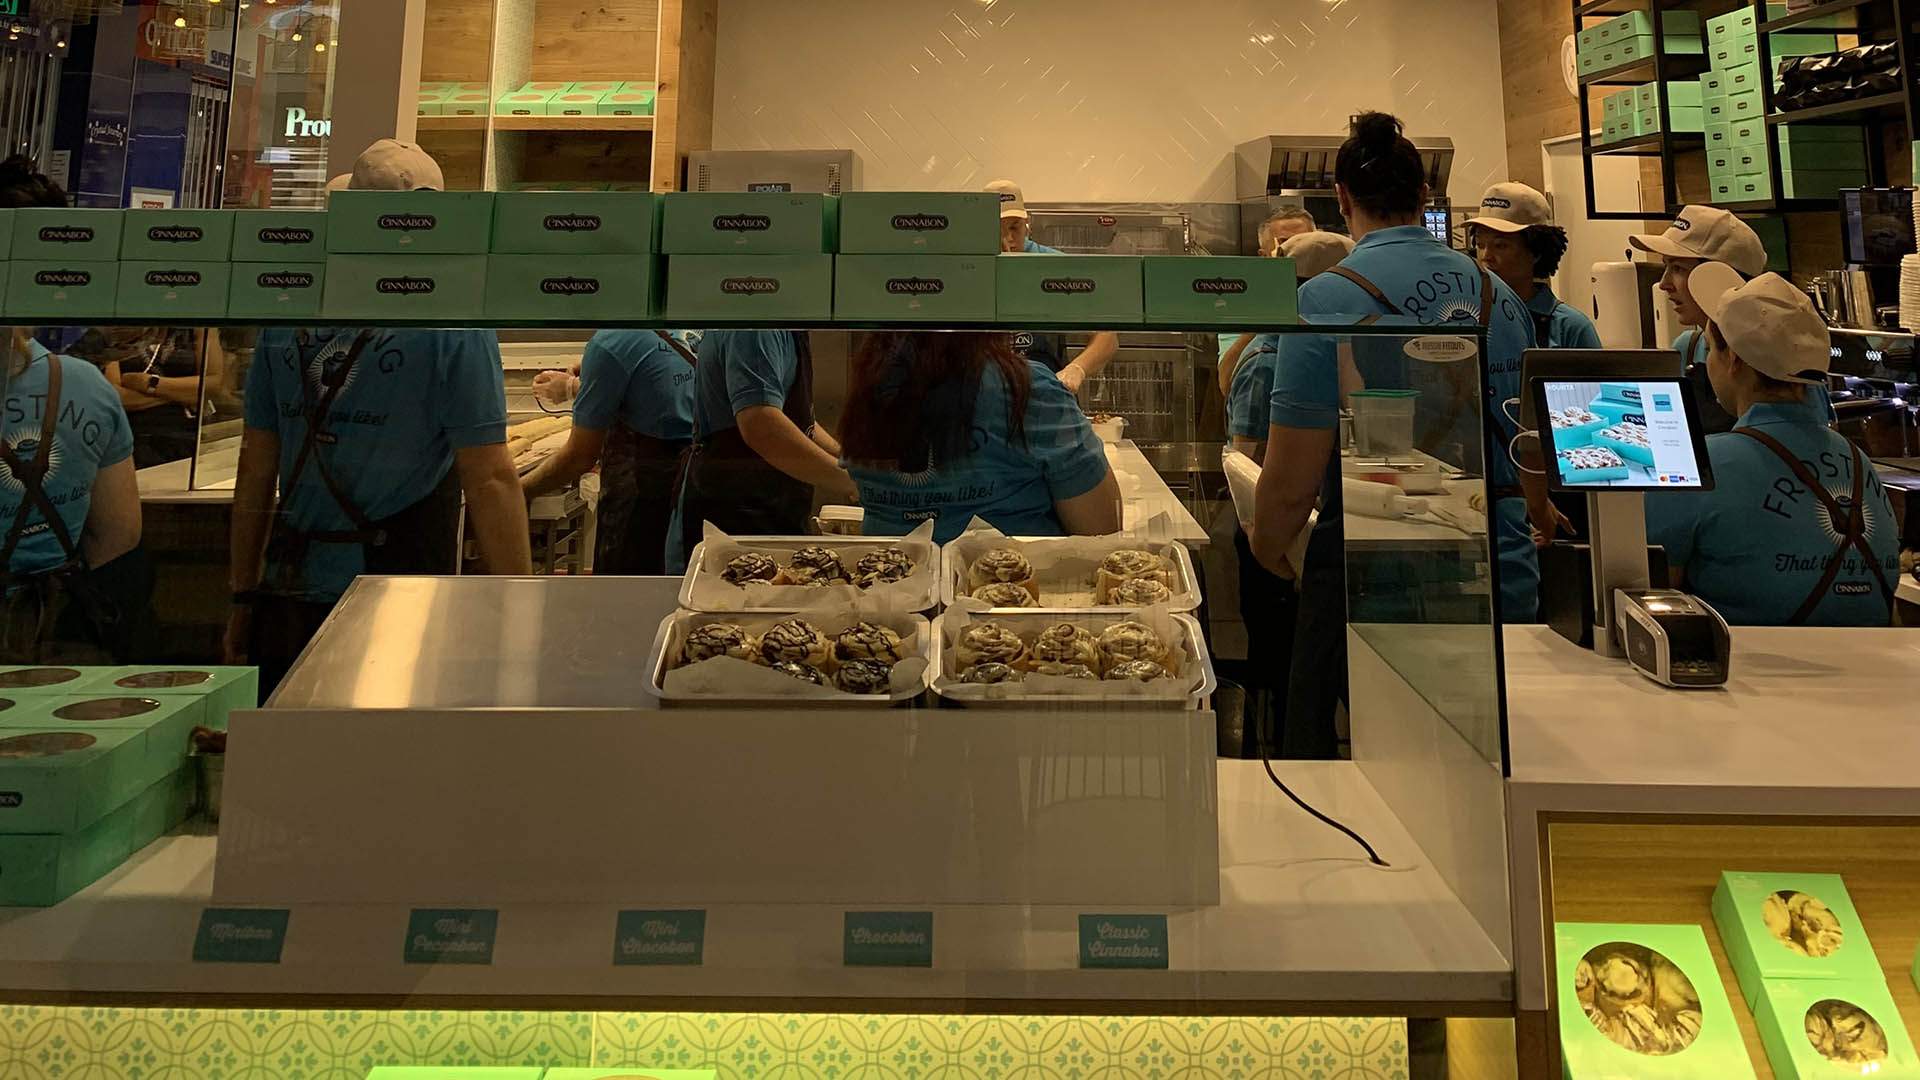 US Bakery Chain Cinnabon Has Opened Its First Aussie Store in Brisbane